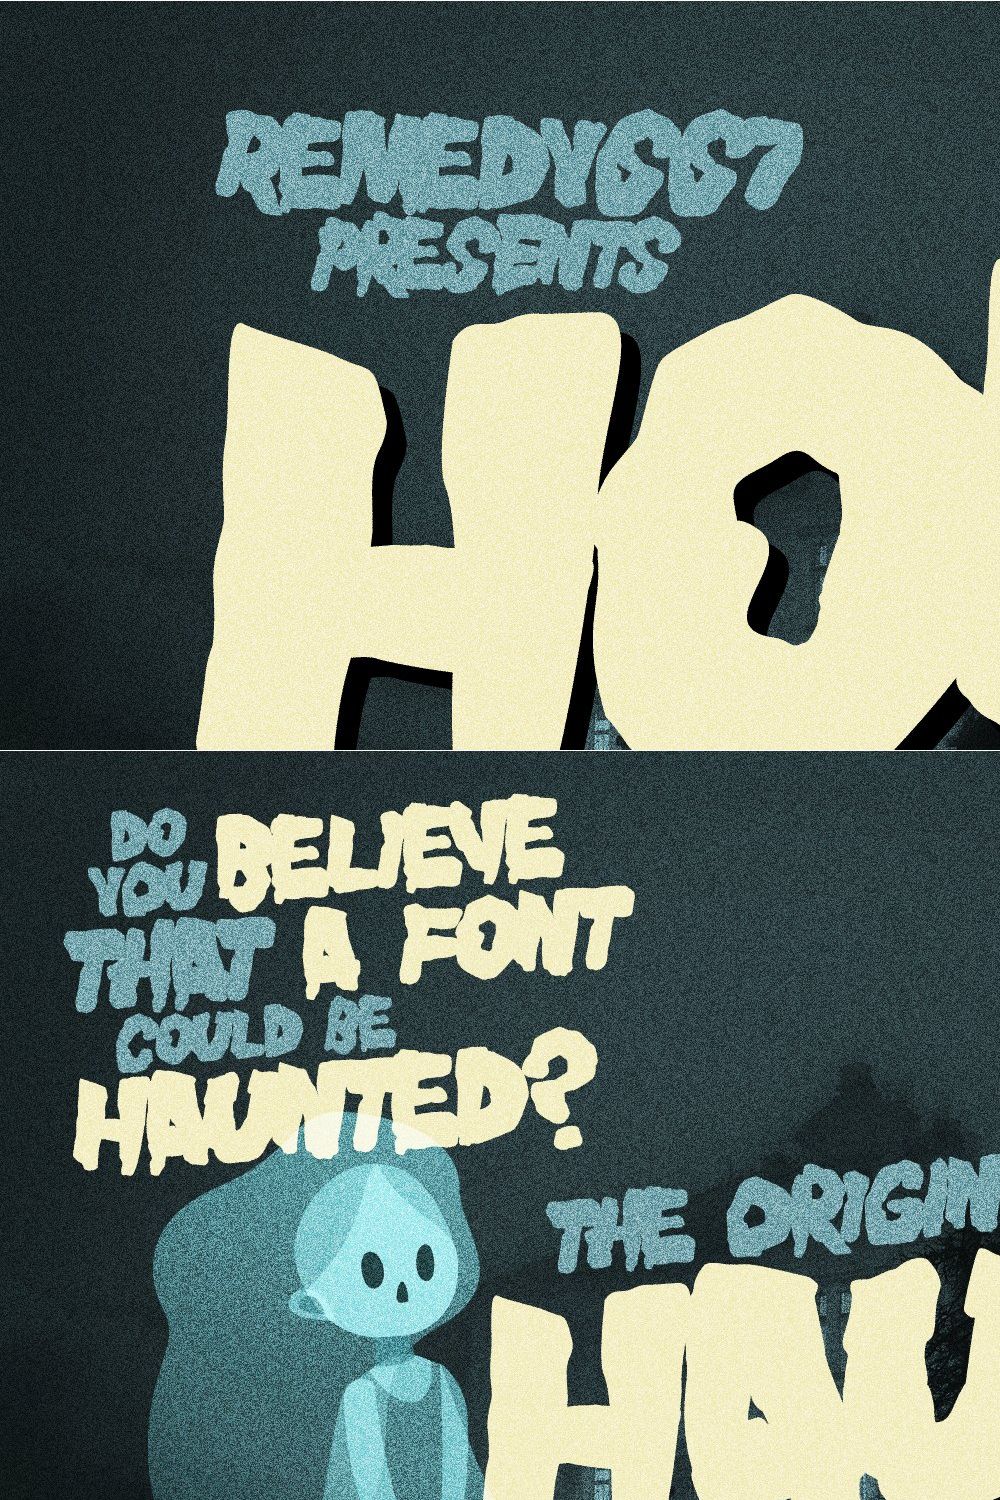 Hont - The Original Haunted Font pinterest preview image.